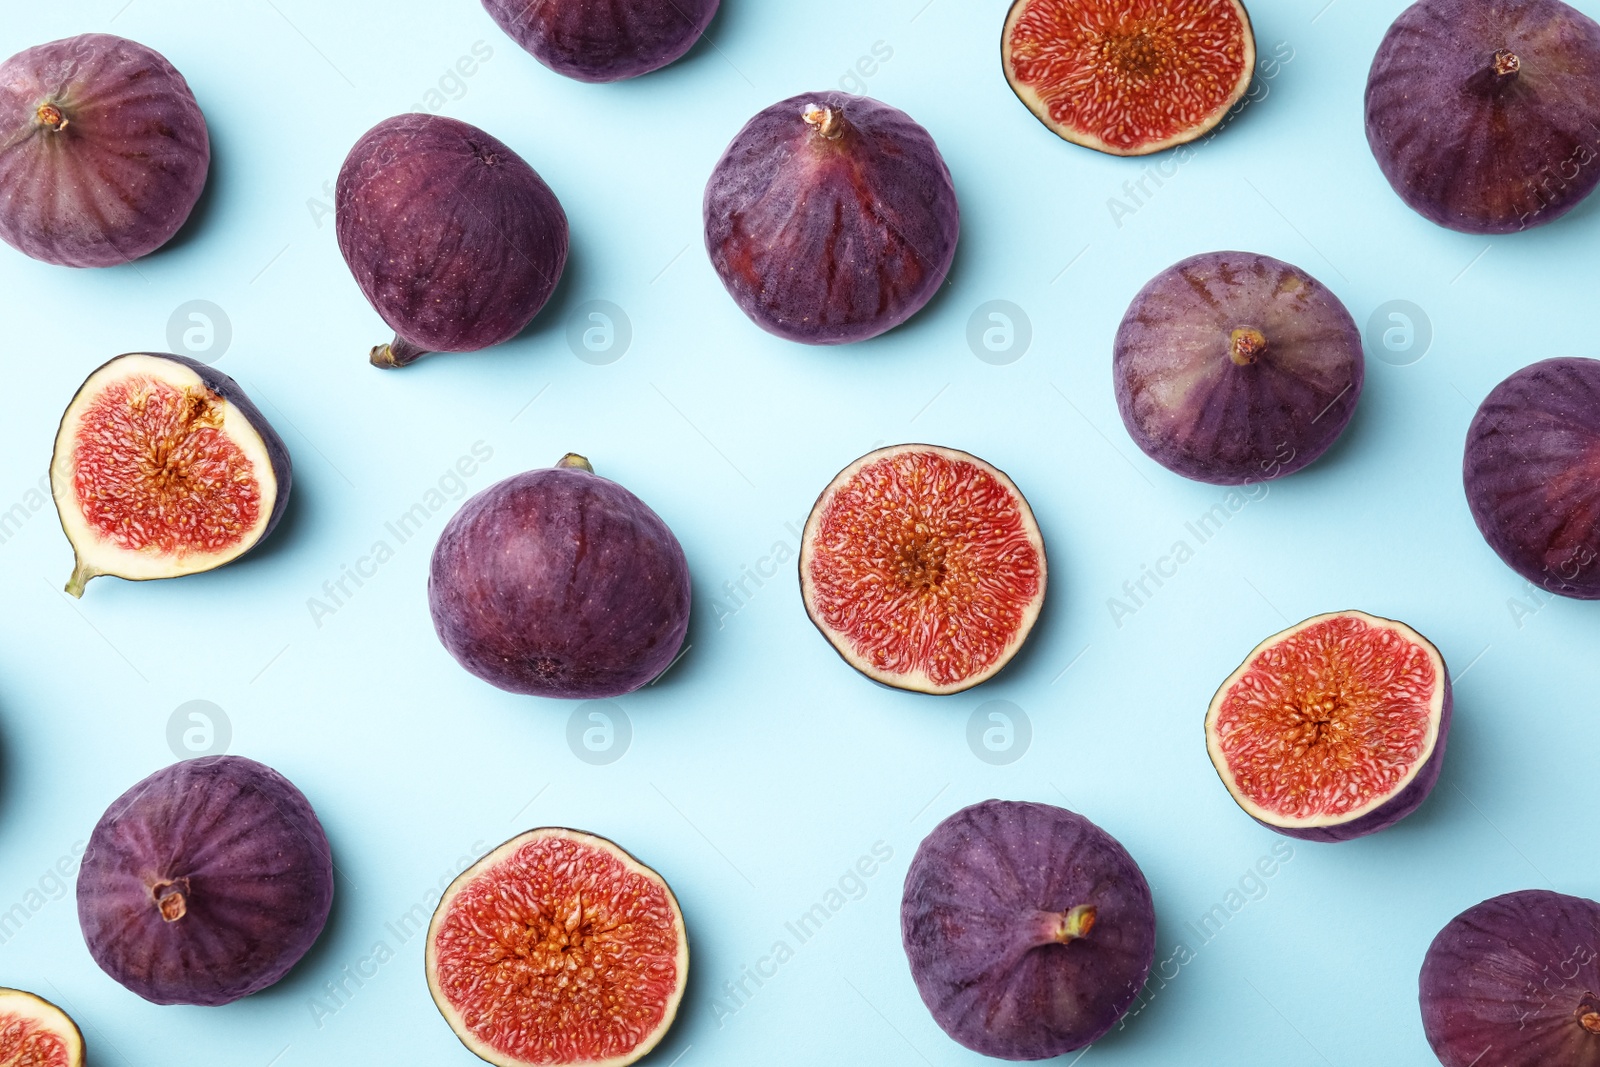 Photo of Fresh ripe purple figs on light blue background, flat lay